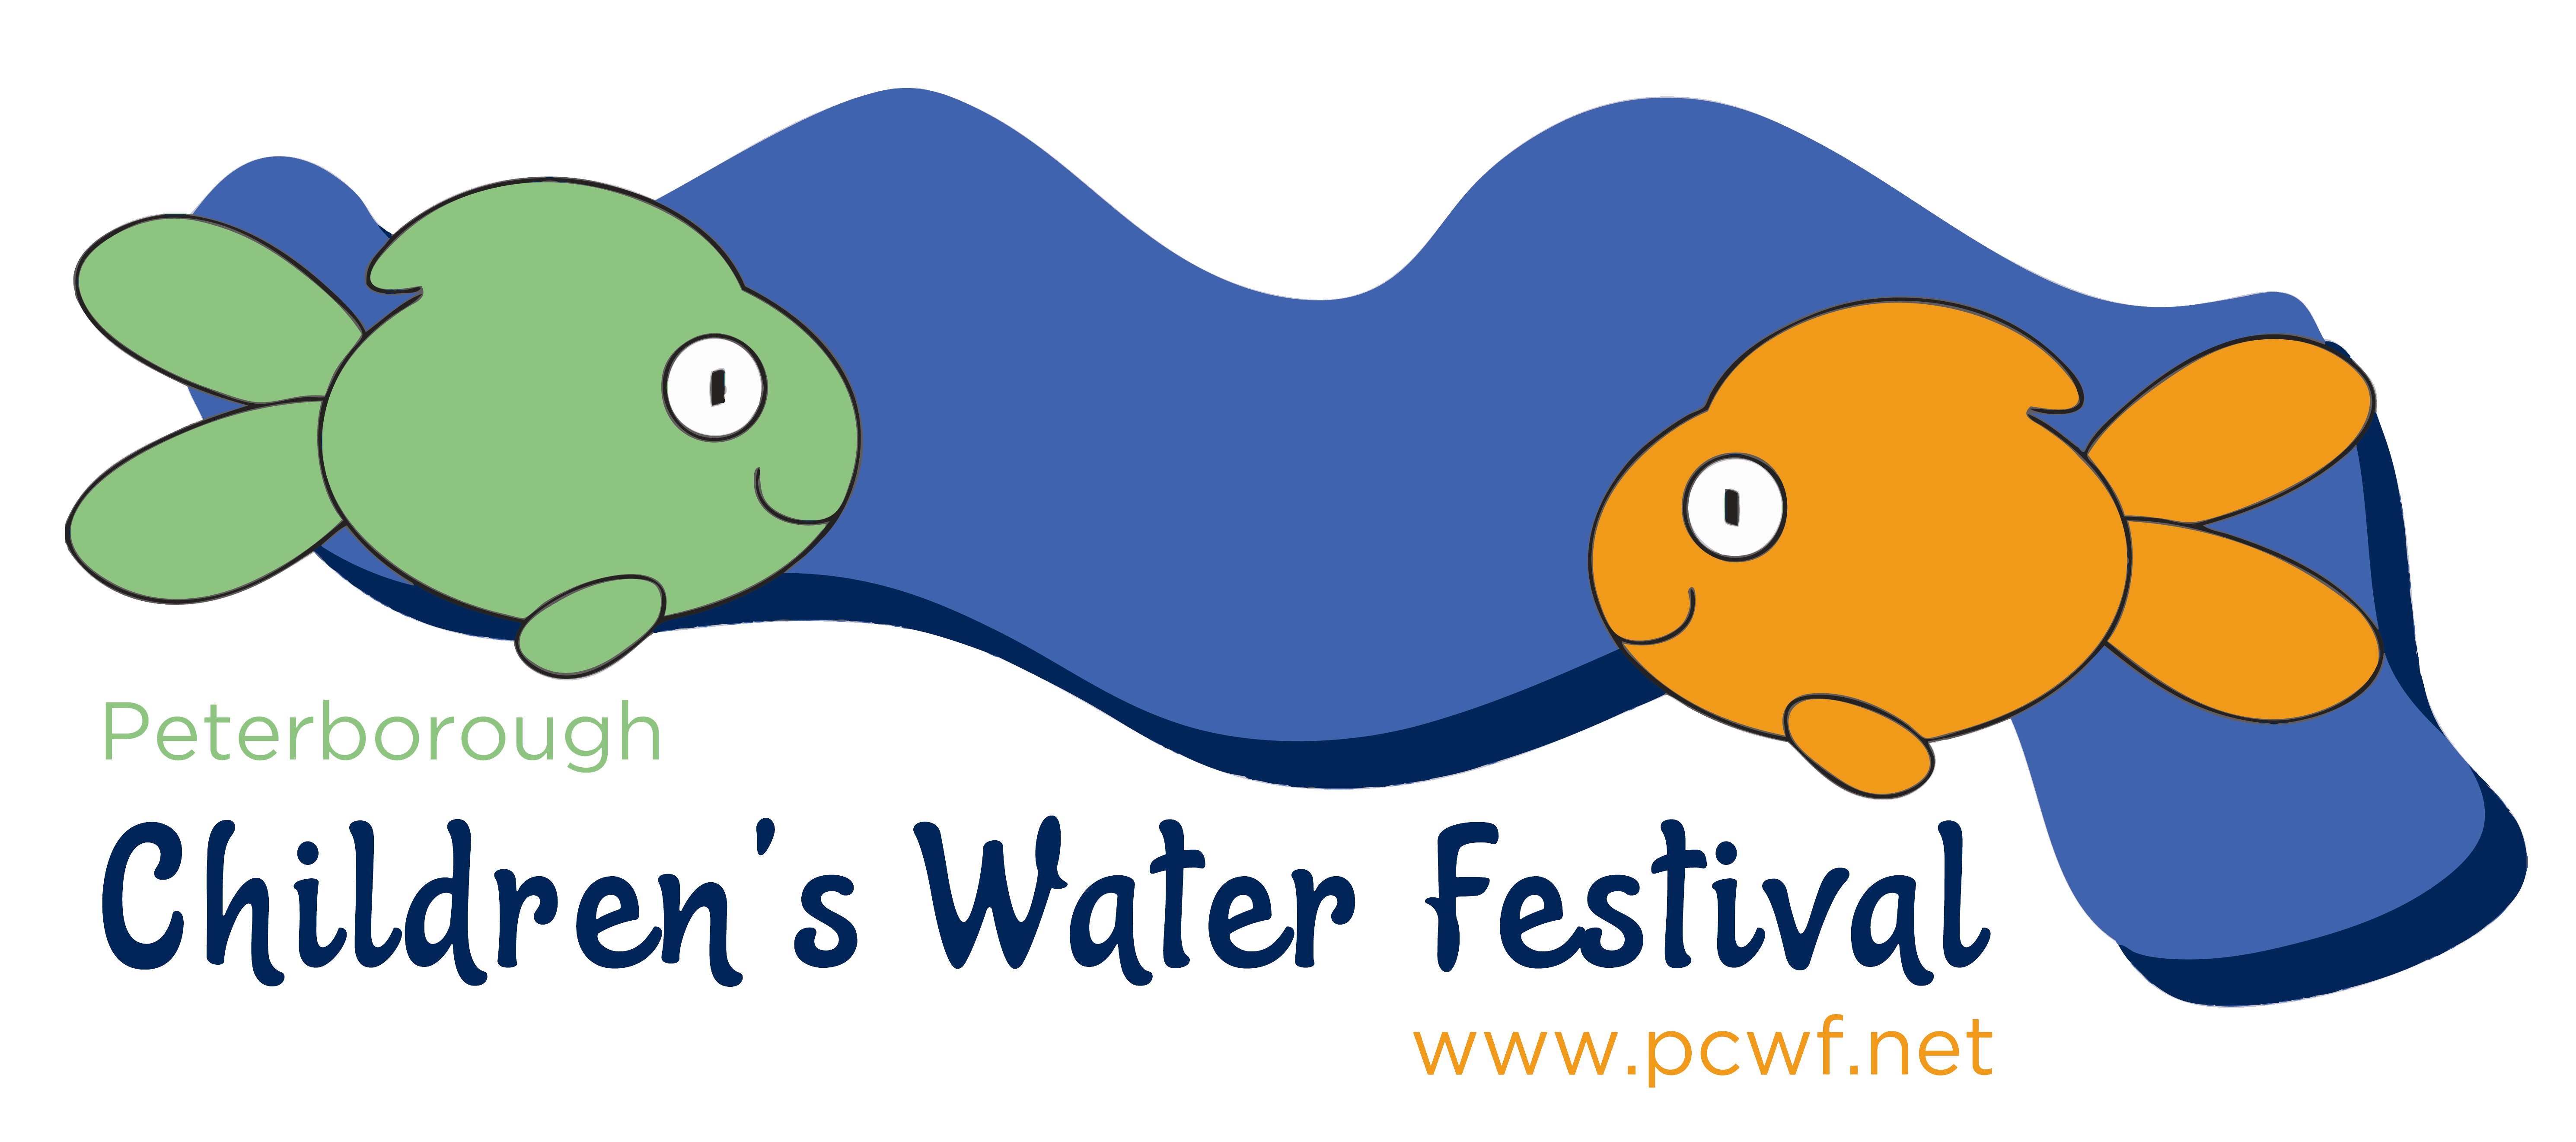 PCWF logo